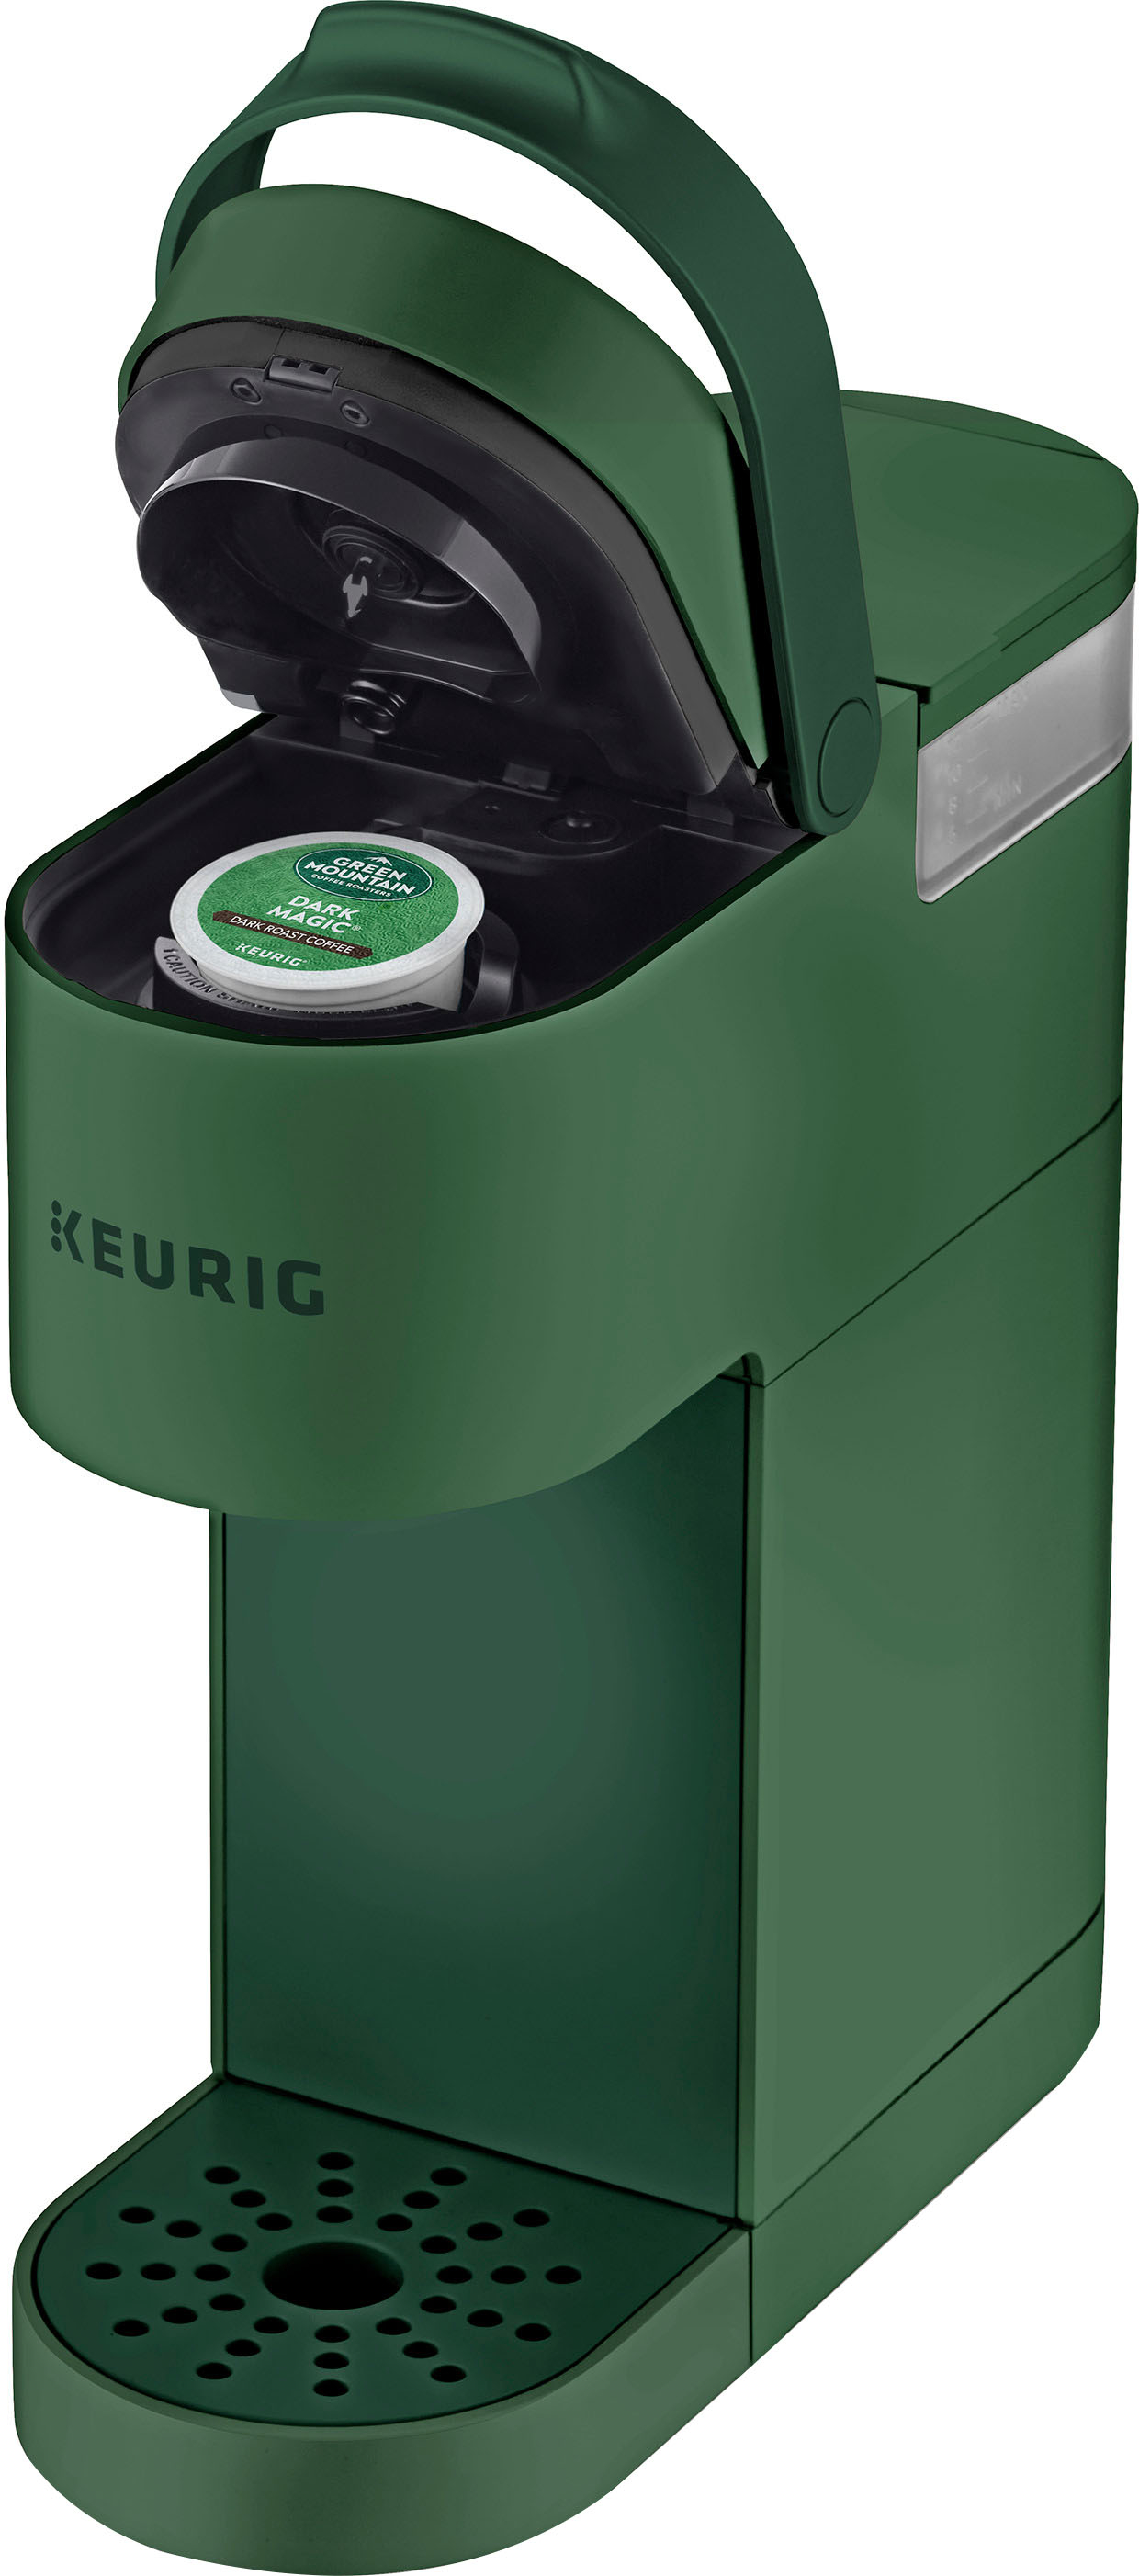 Angle View: Keurig - K-Mini Single Serve K-Cup Pod Coffee Maker - Evergreen